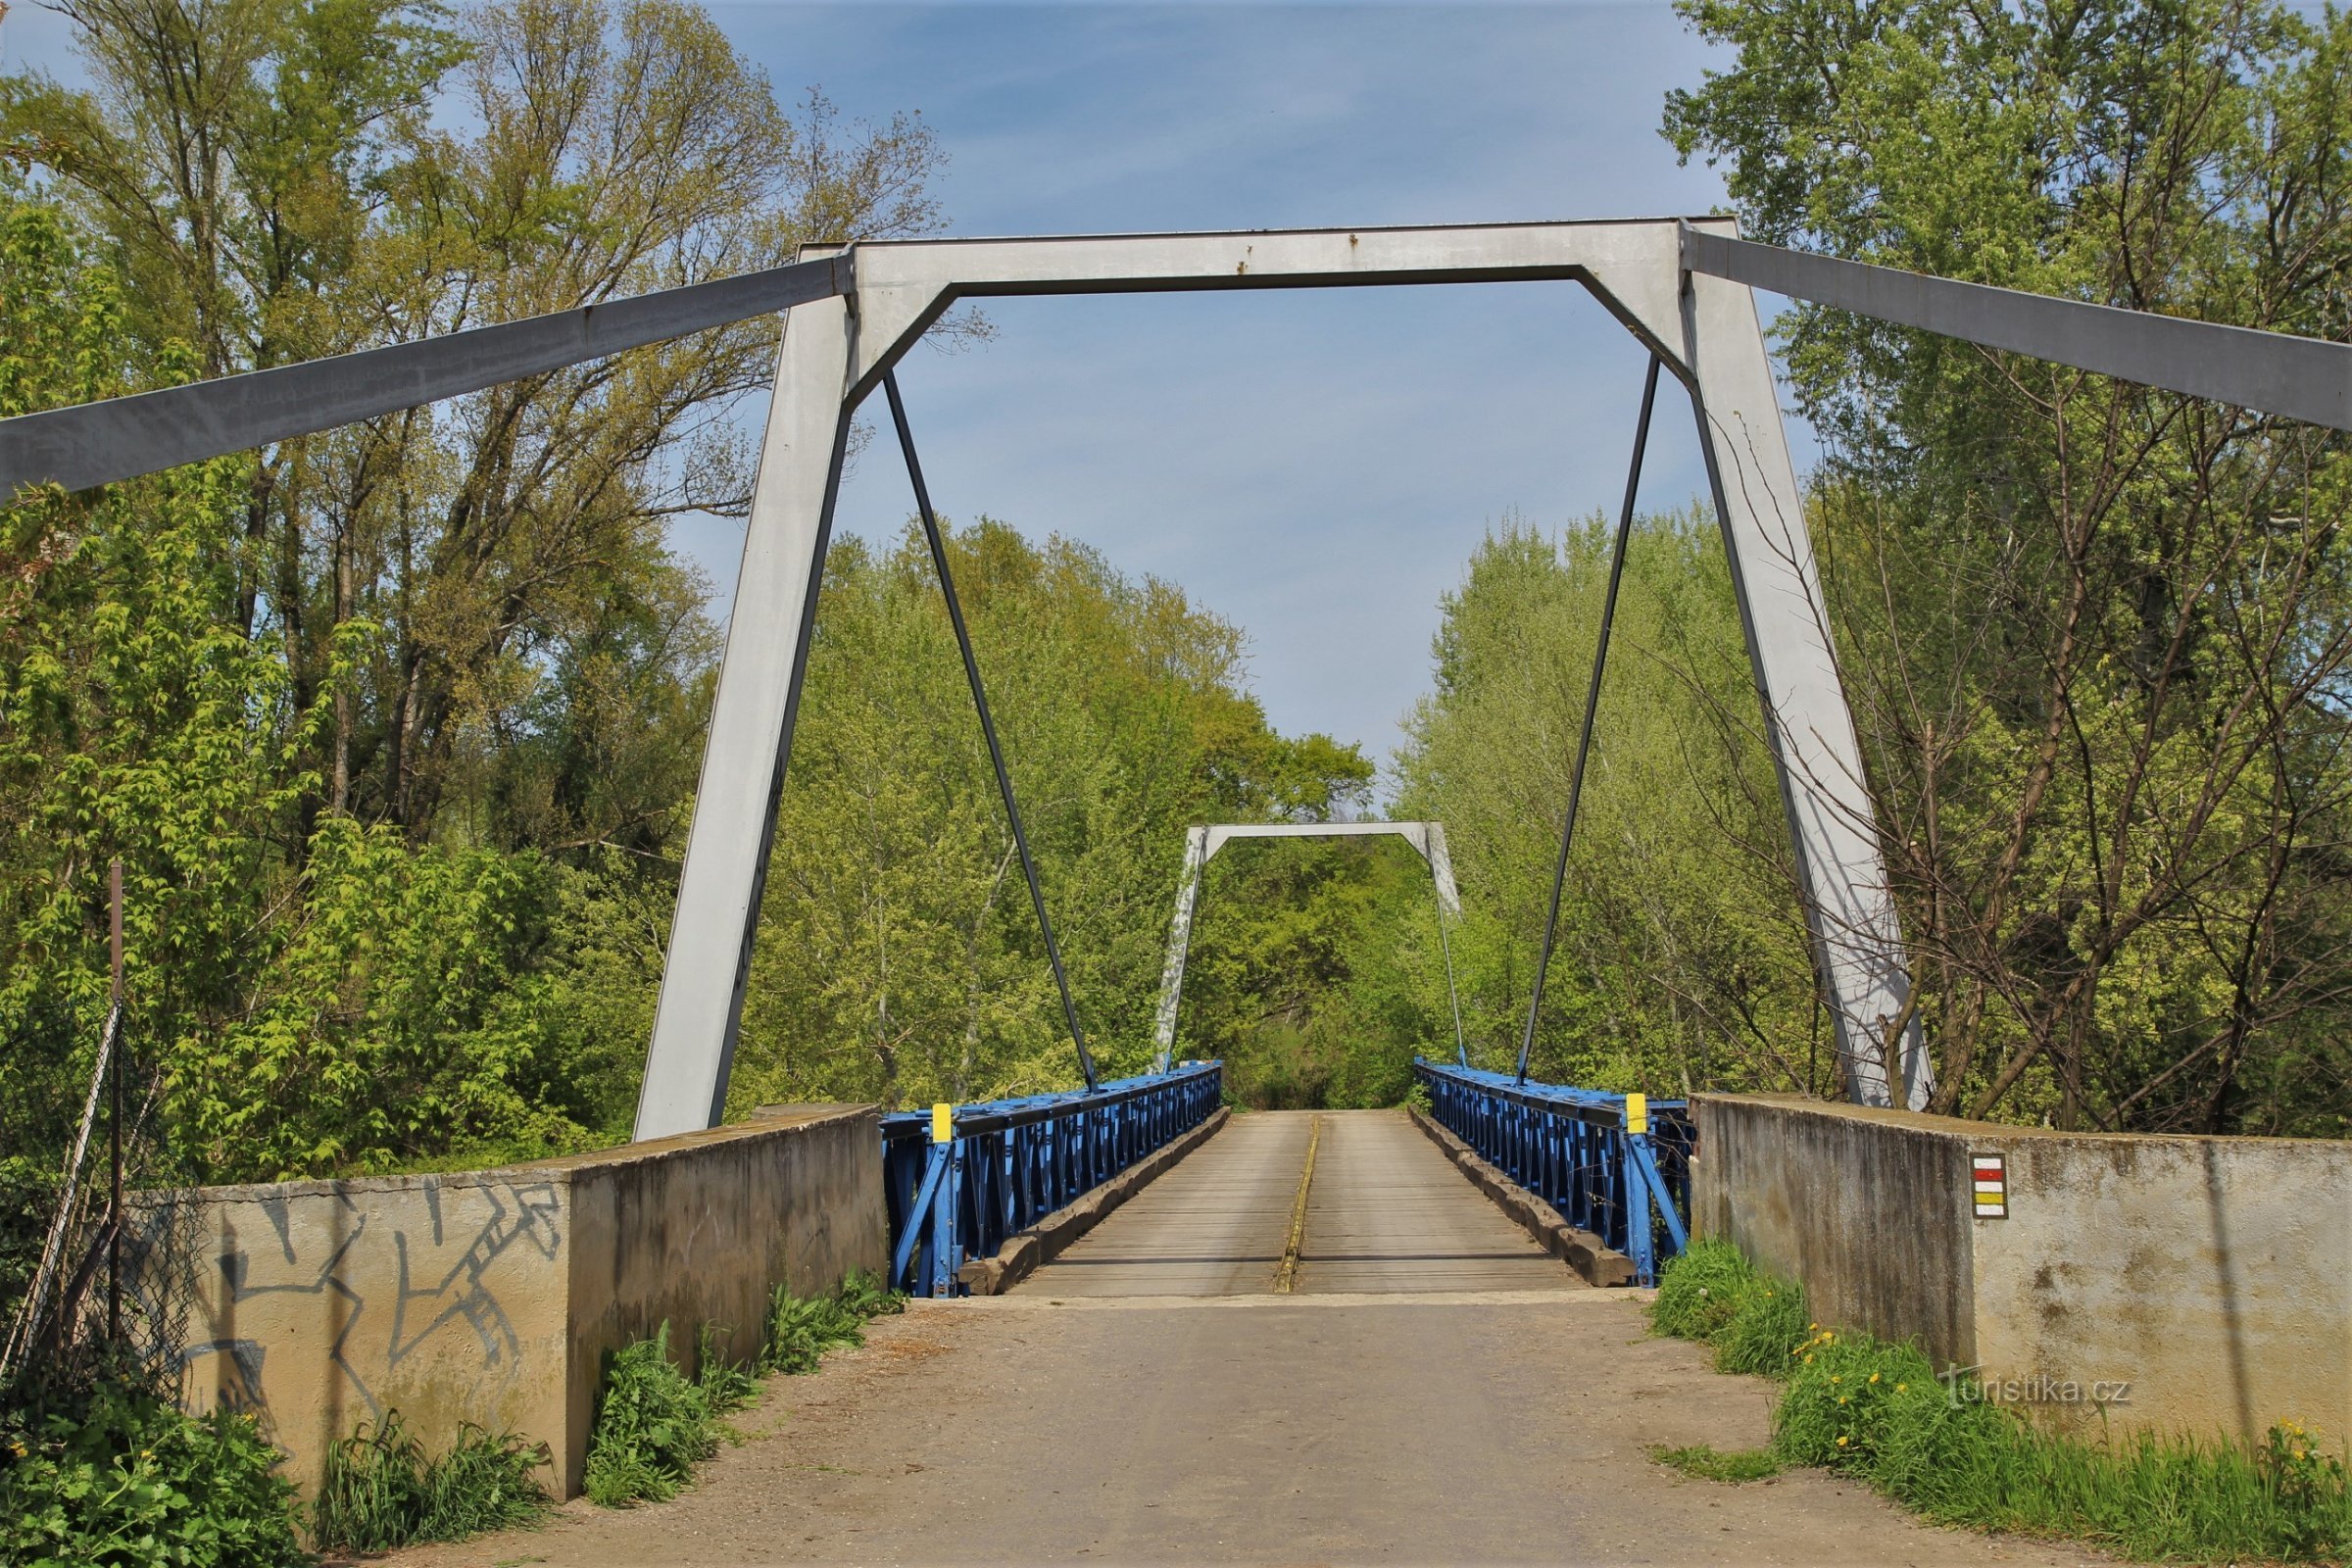 Bulgarere - broen over Dyji